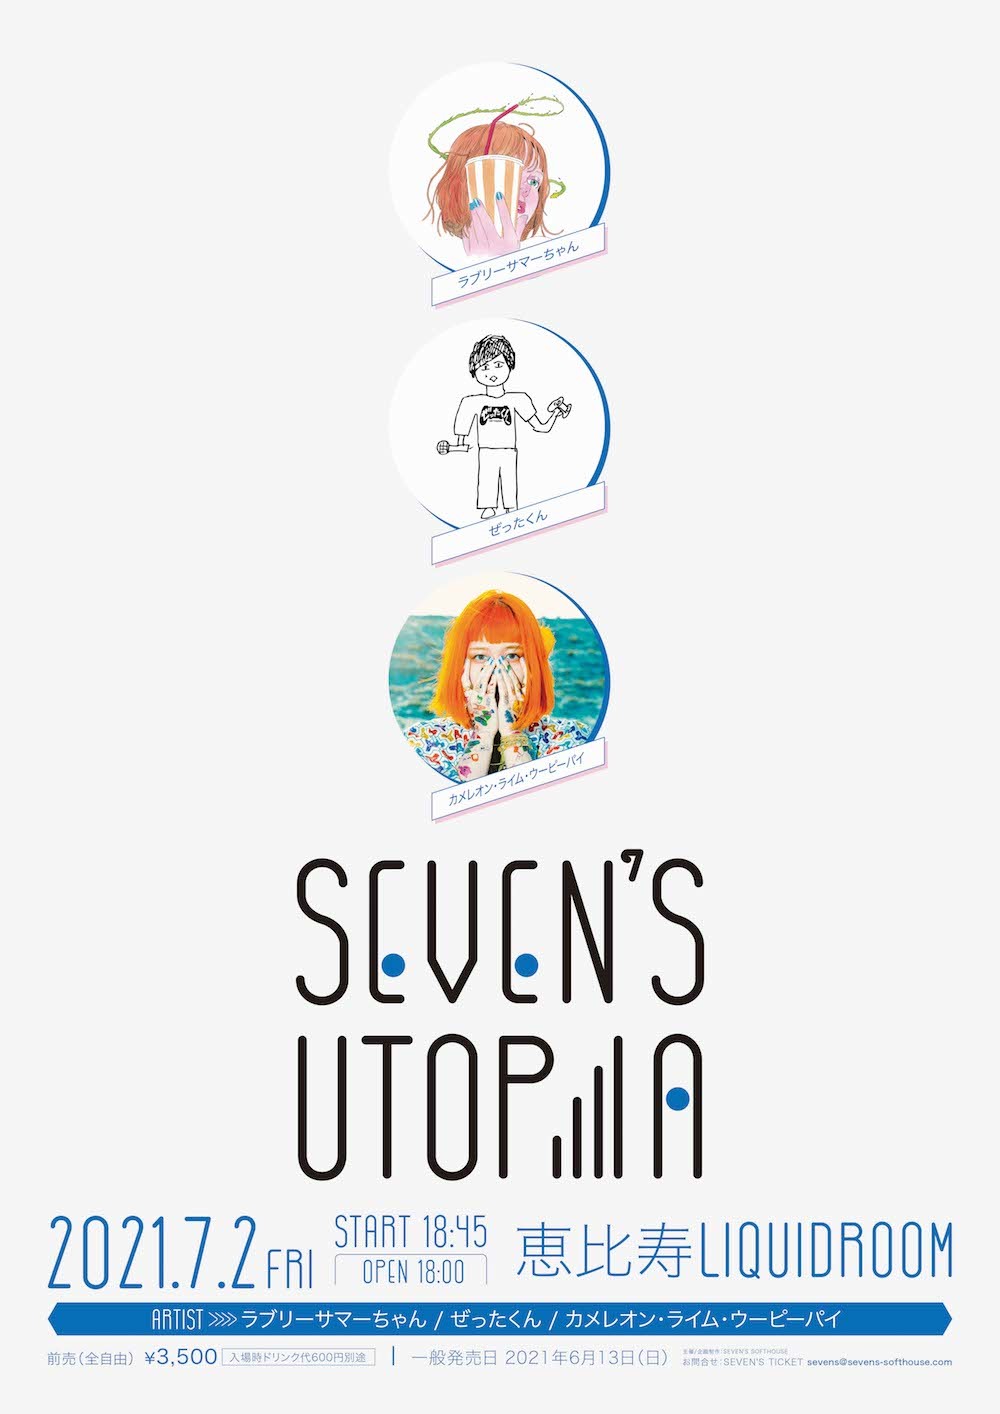 『SEVEN’S UTOPIA』